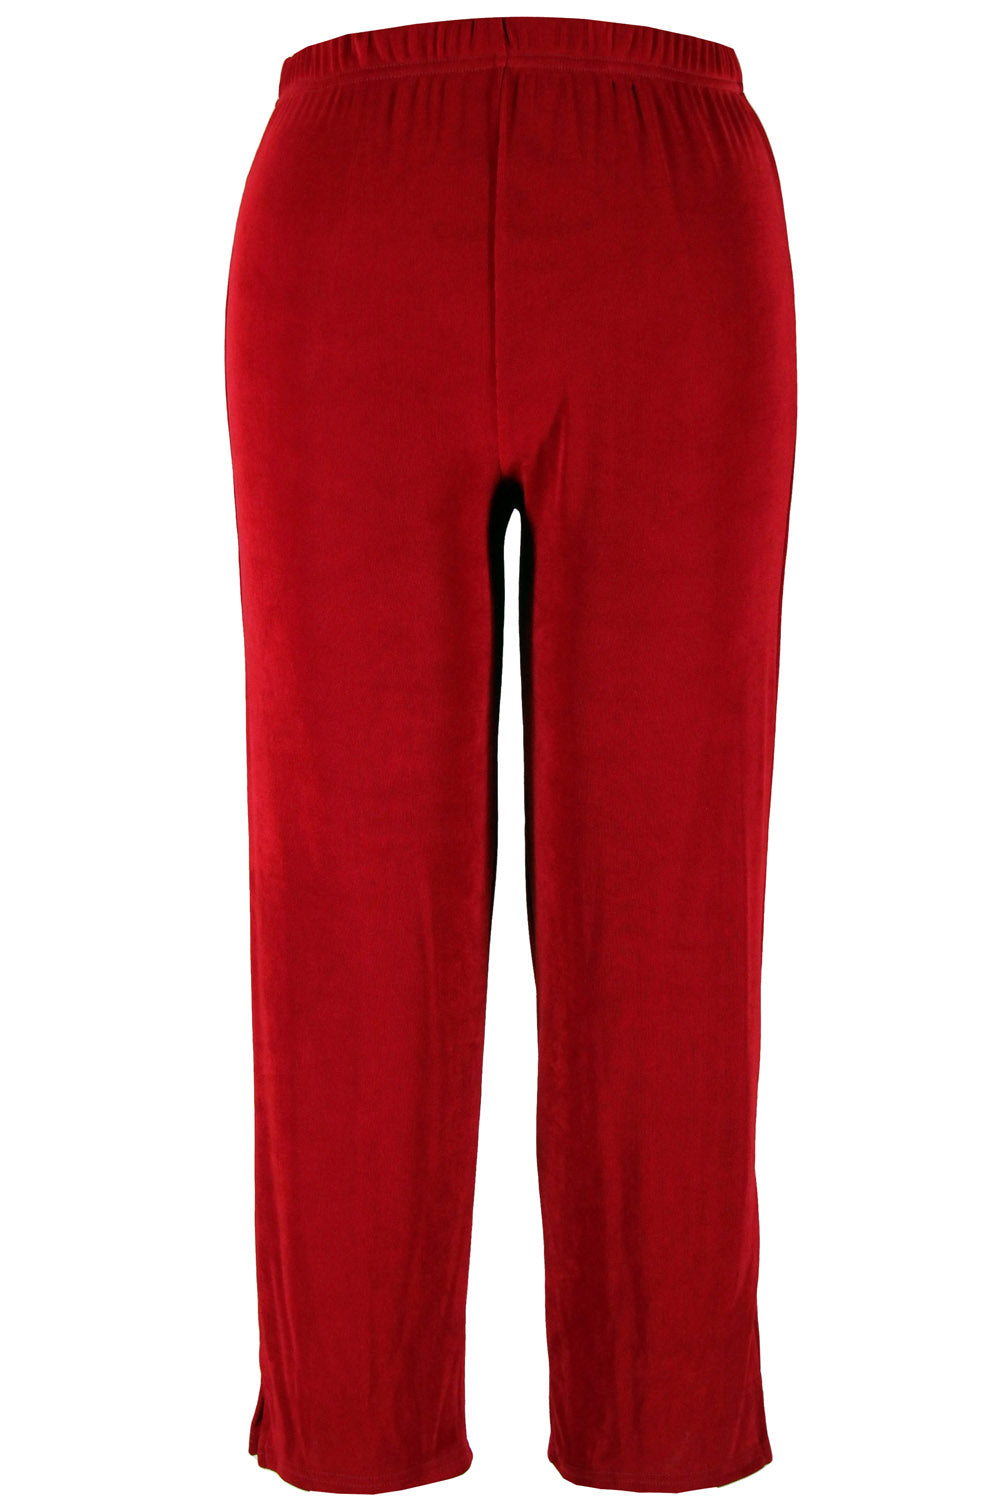 Jostar Women's Non Iron Ankle Length Pants, 501AY - Jostar Online